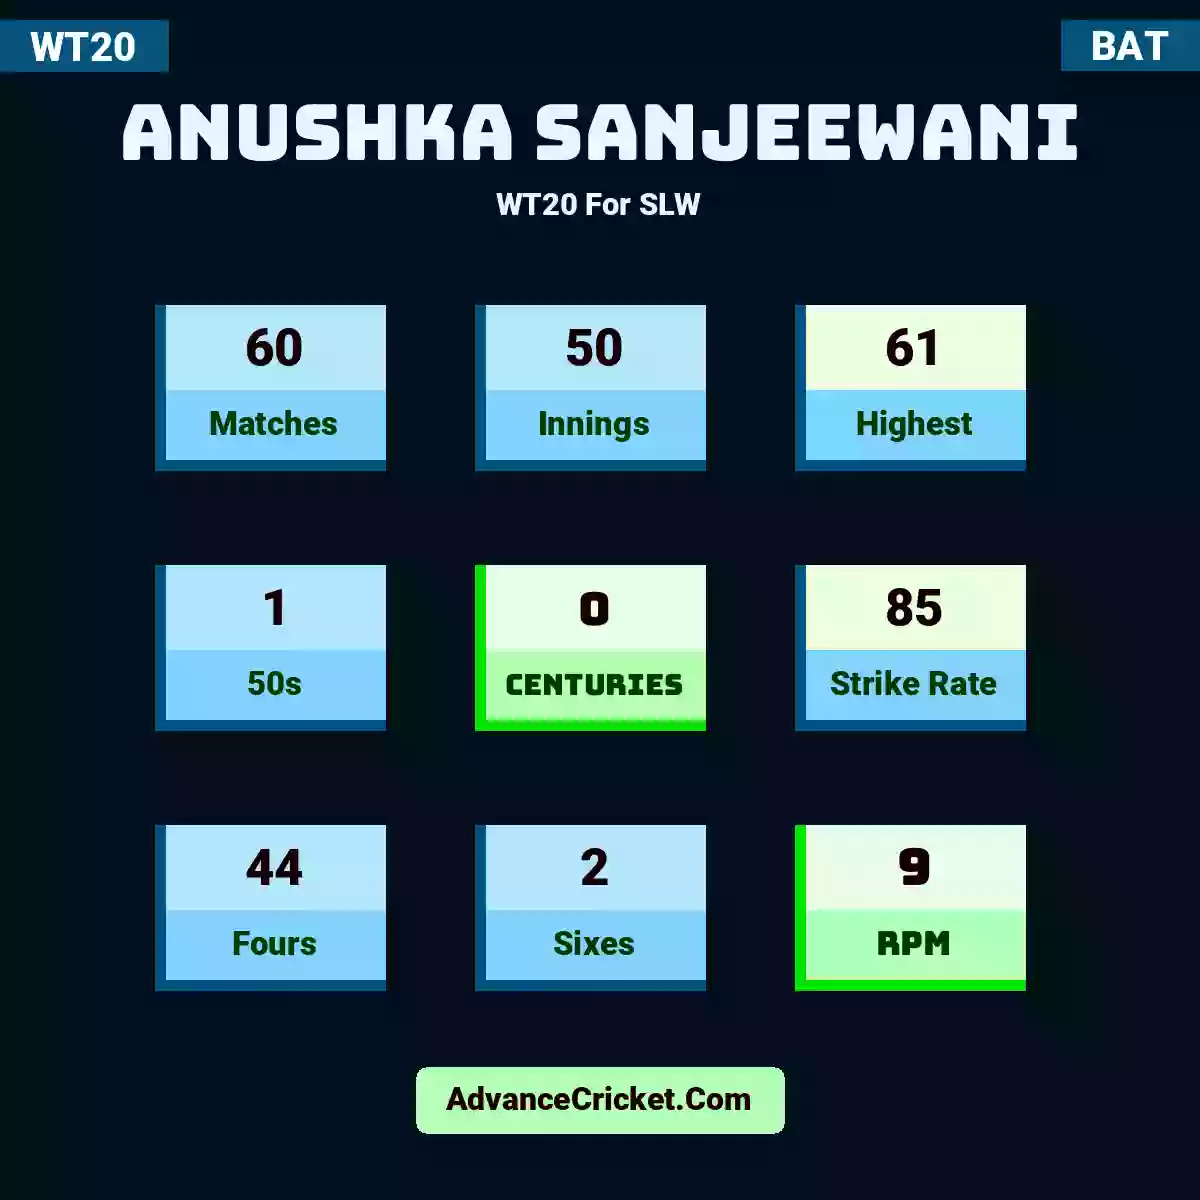 Anushka Sanjeewani WT20  For SLW, Anushka Sanjeewani played 60 matches, scored 61 runs as highest, 1 half-centuries, and 0 centuries, with a strike rate of 85. A.Sanjeewani hit 44 fours and 2 sixes, with an RPM of 9.